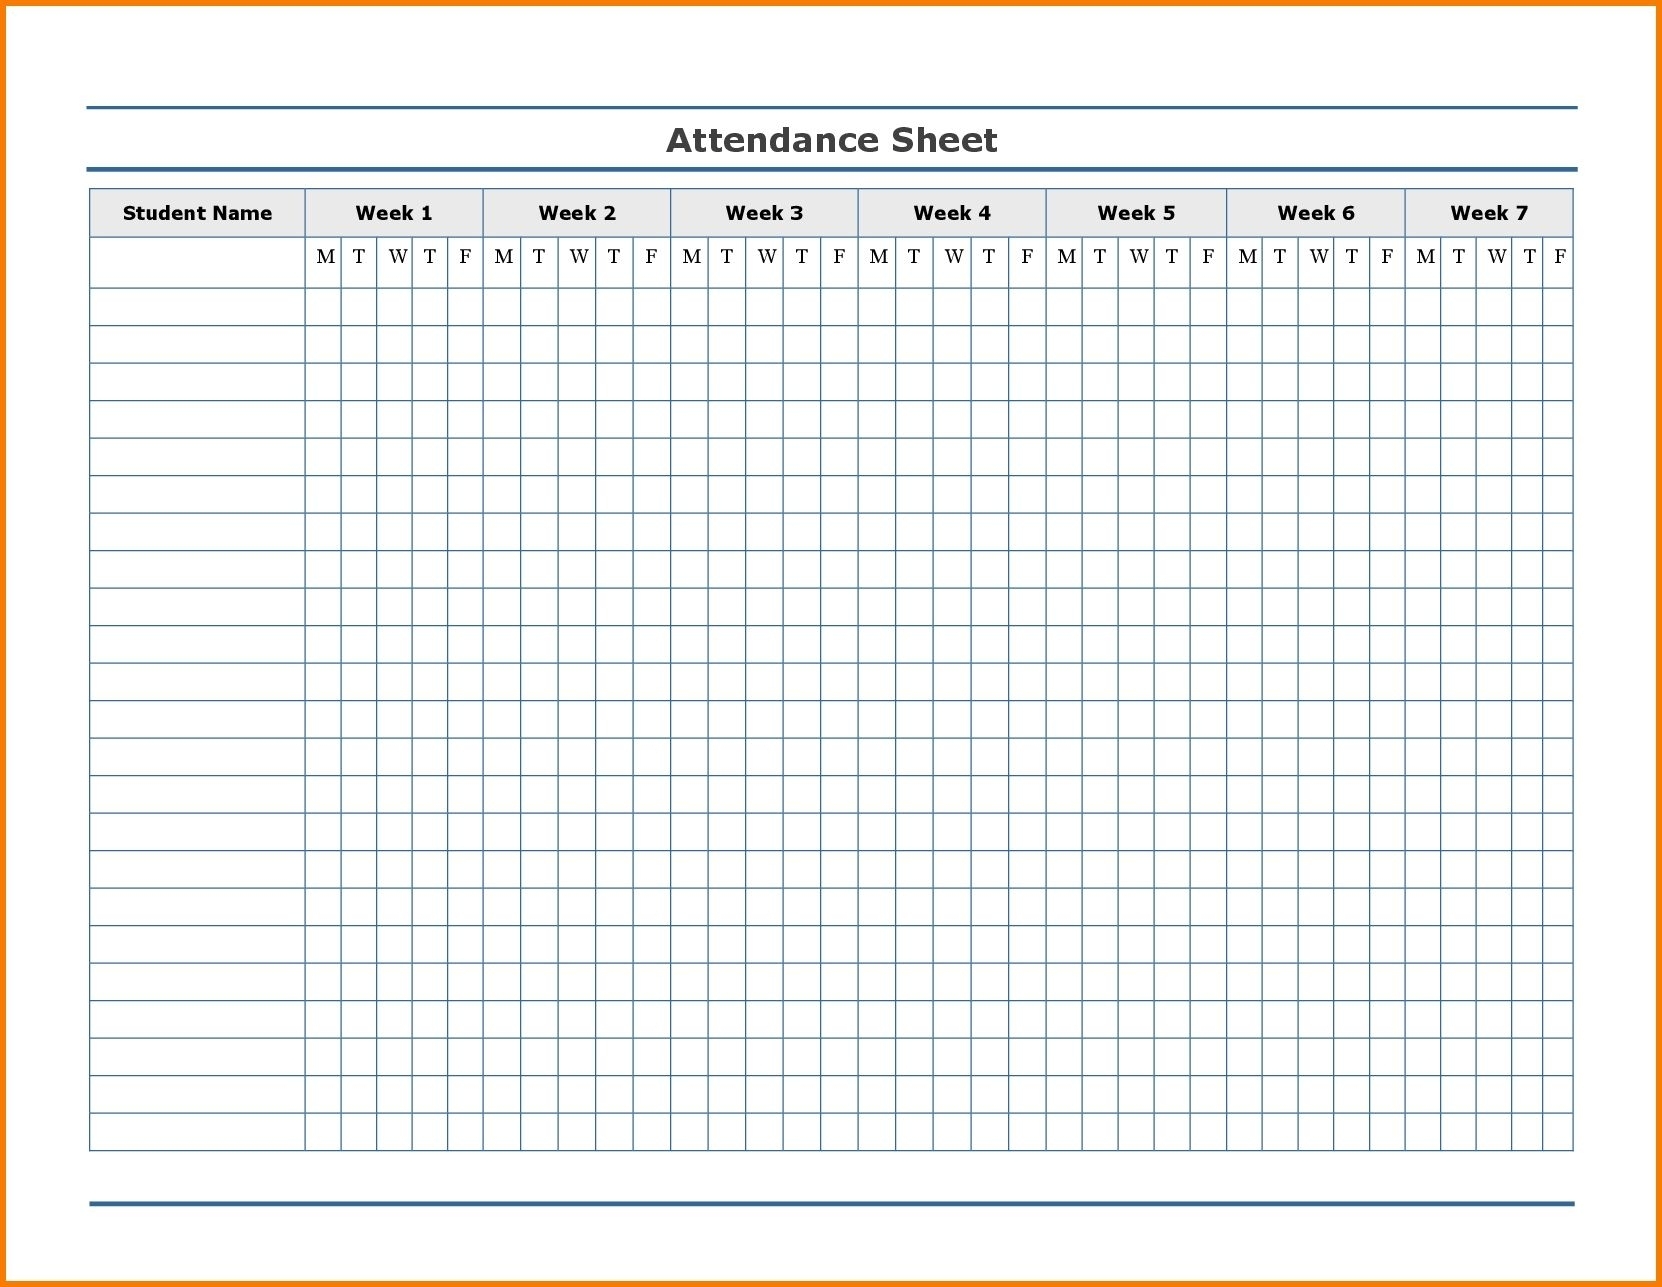 Free Employee Attendance Calendar | Employee Tracker with regard to Employee Attendance Calendar 2020 Printable Free